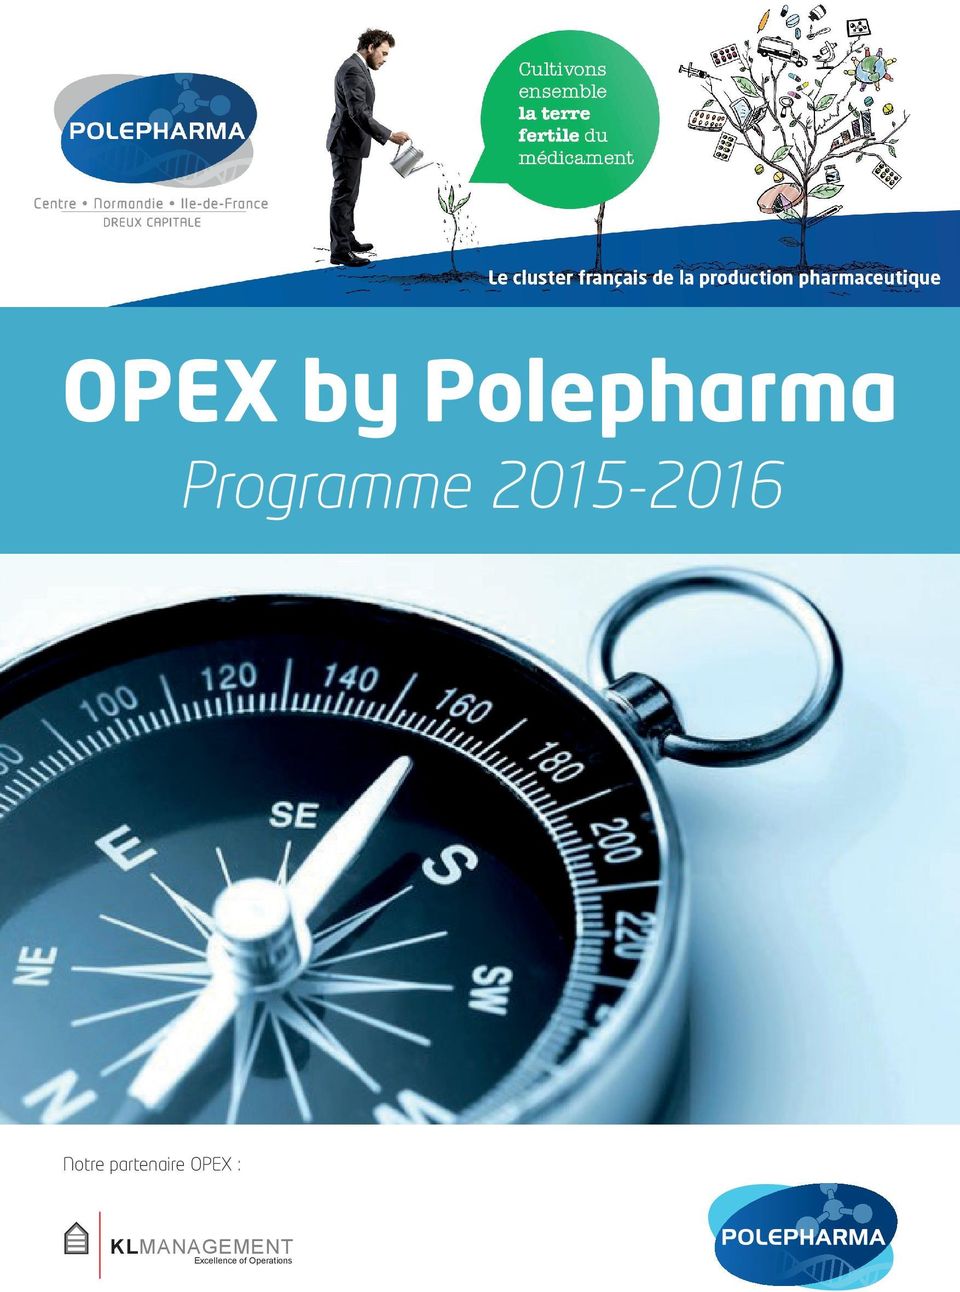 Notre partenaire OPEX :